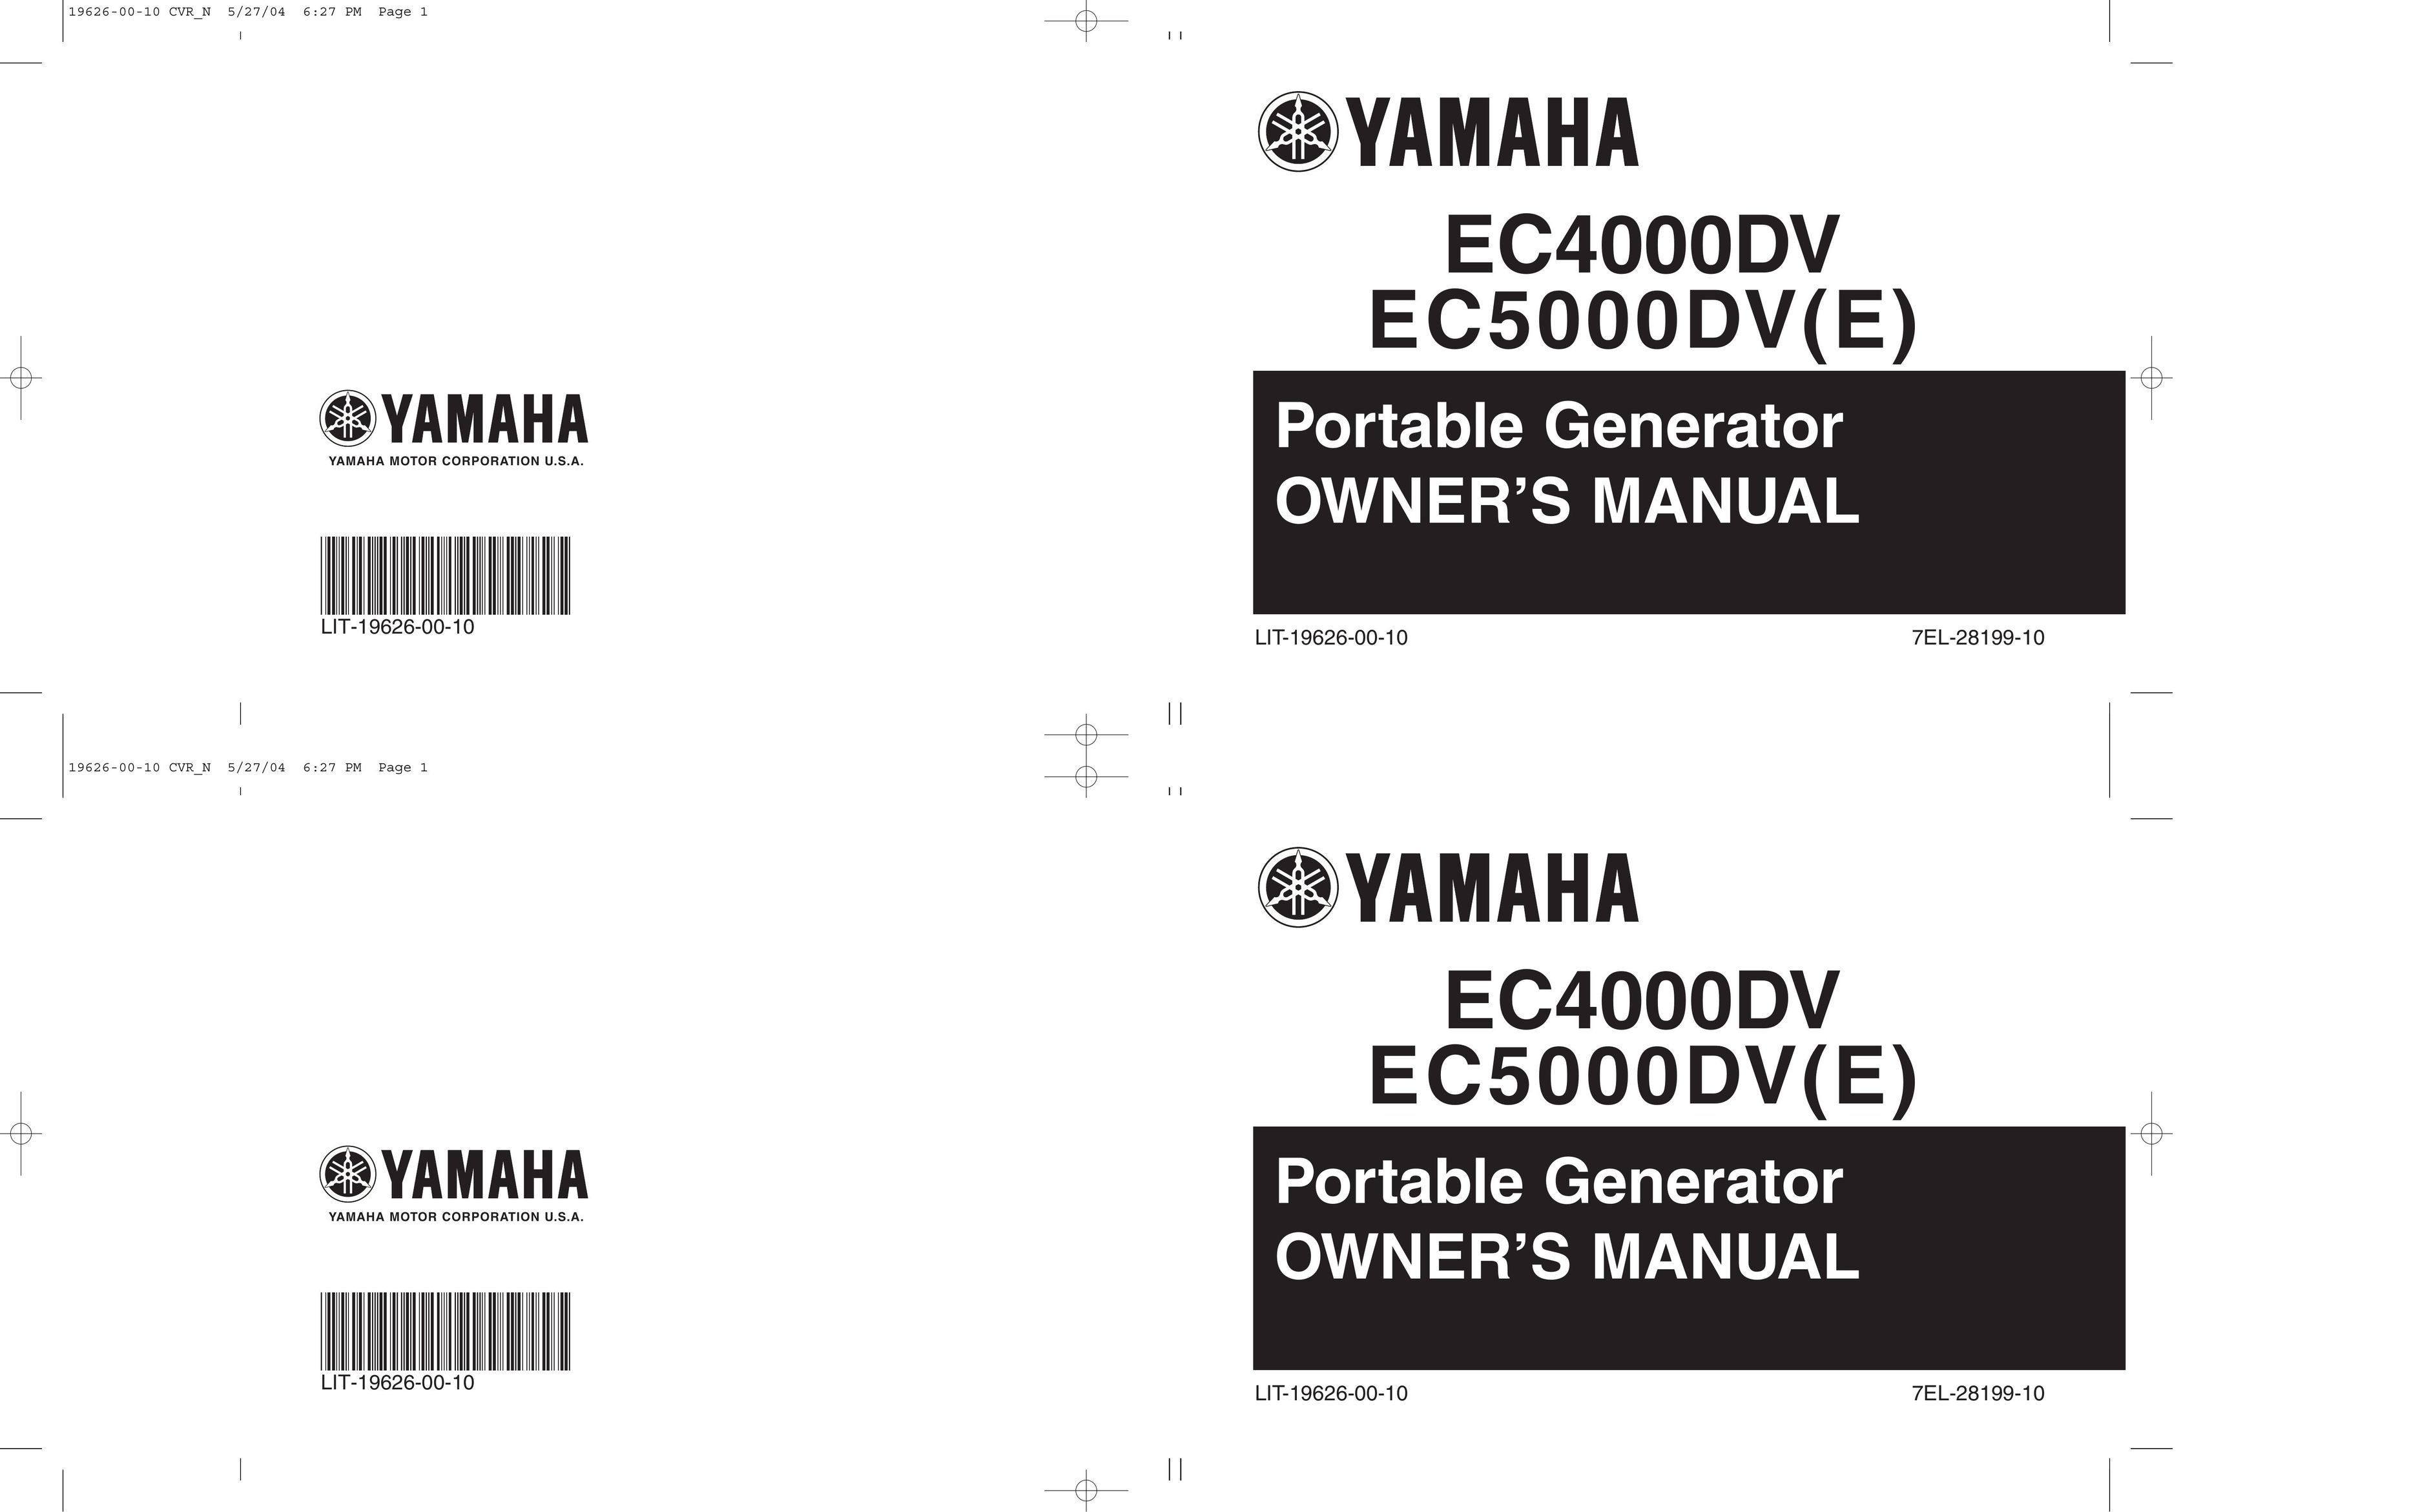 Yamaha EC5000DV(E) Welding System User Manual